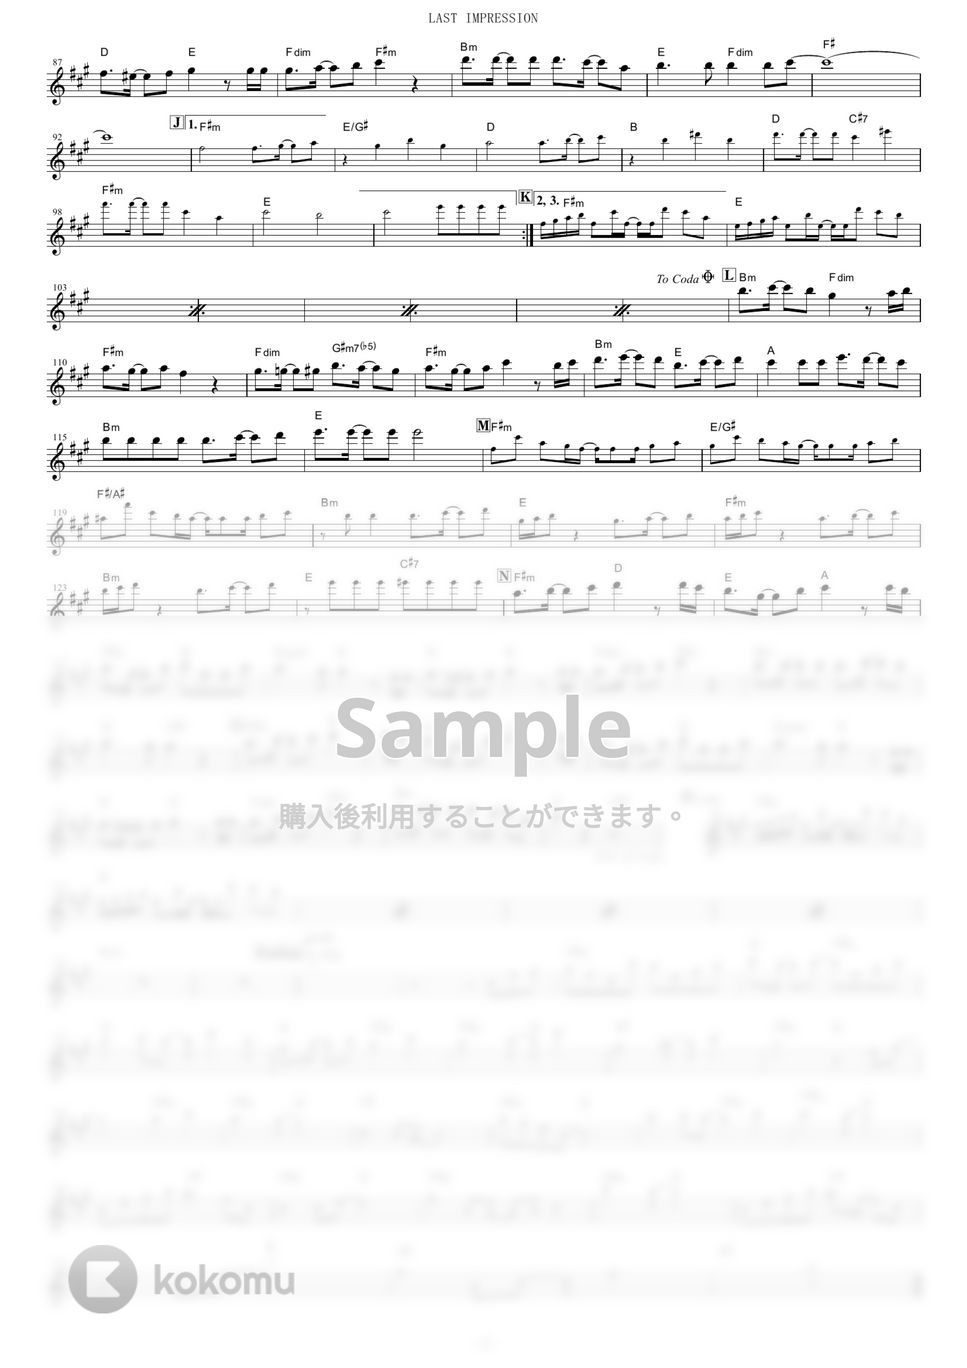 TWO-MIX - LAST IMPRESSION (『新機動戦記ガンダムW Endless Waltz 特別編』 / in Bb) by muta-sax